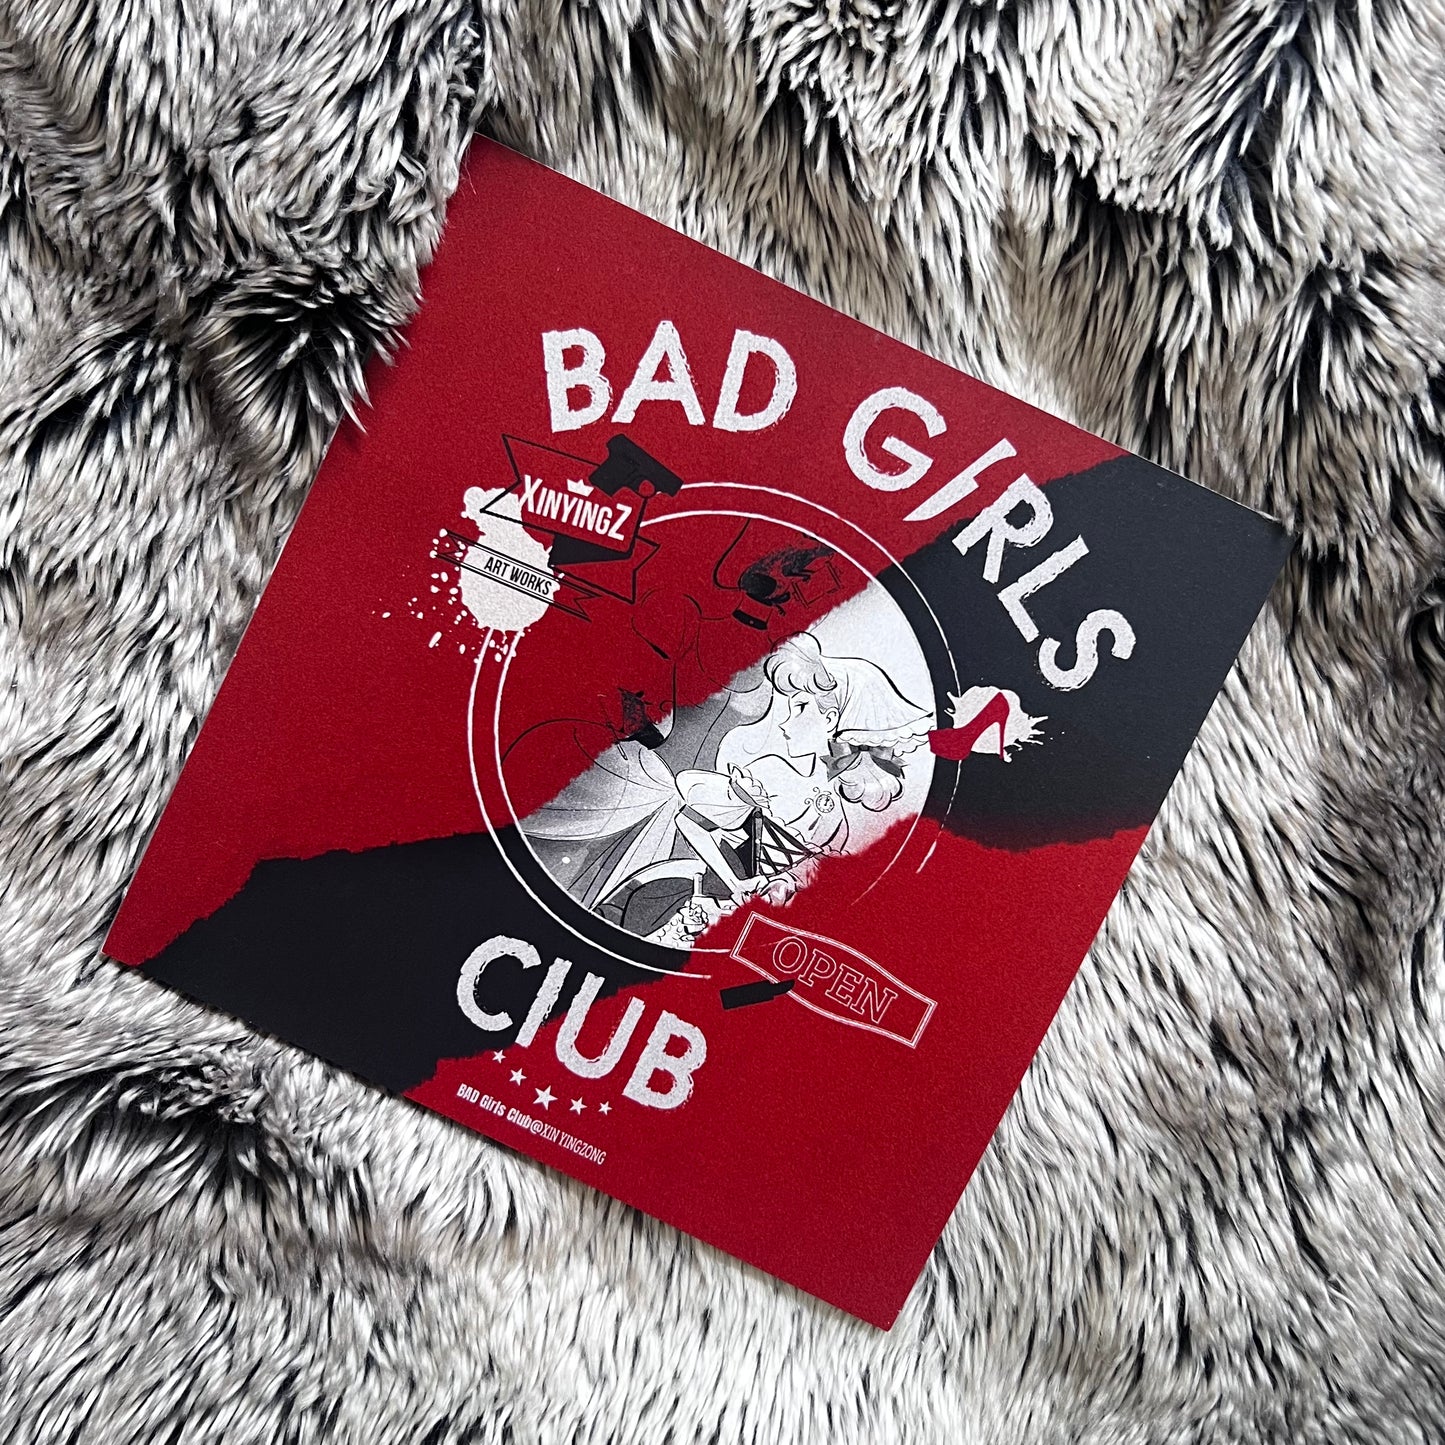 "BAD CIRLS CLUB" art book, 8 x 8", by Yingzong Xin